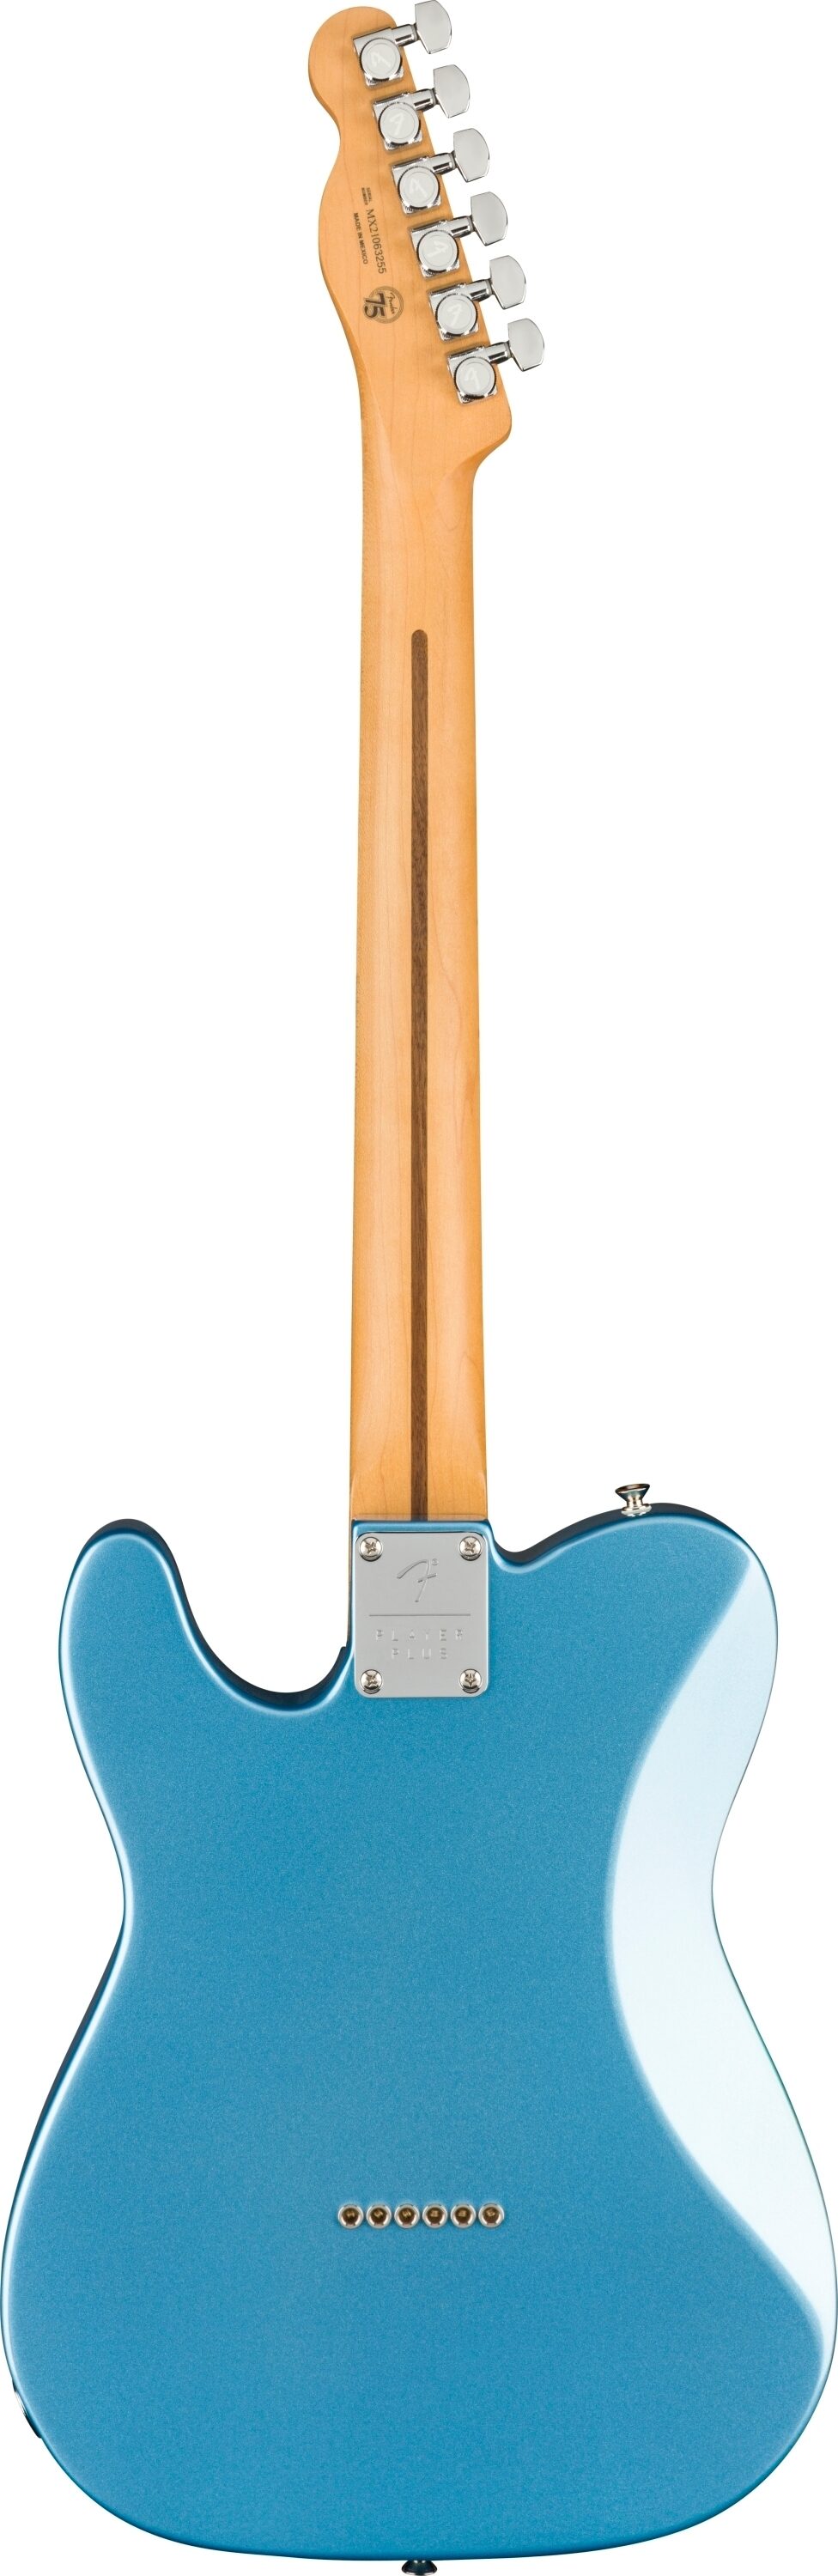 Fender Player Plus Nashville Telecaster Electric Guitar | zZounds